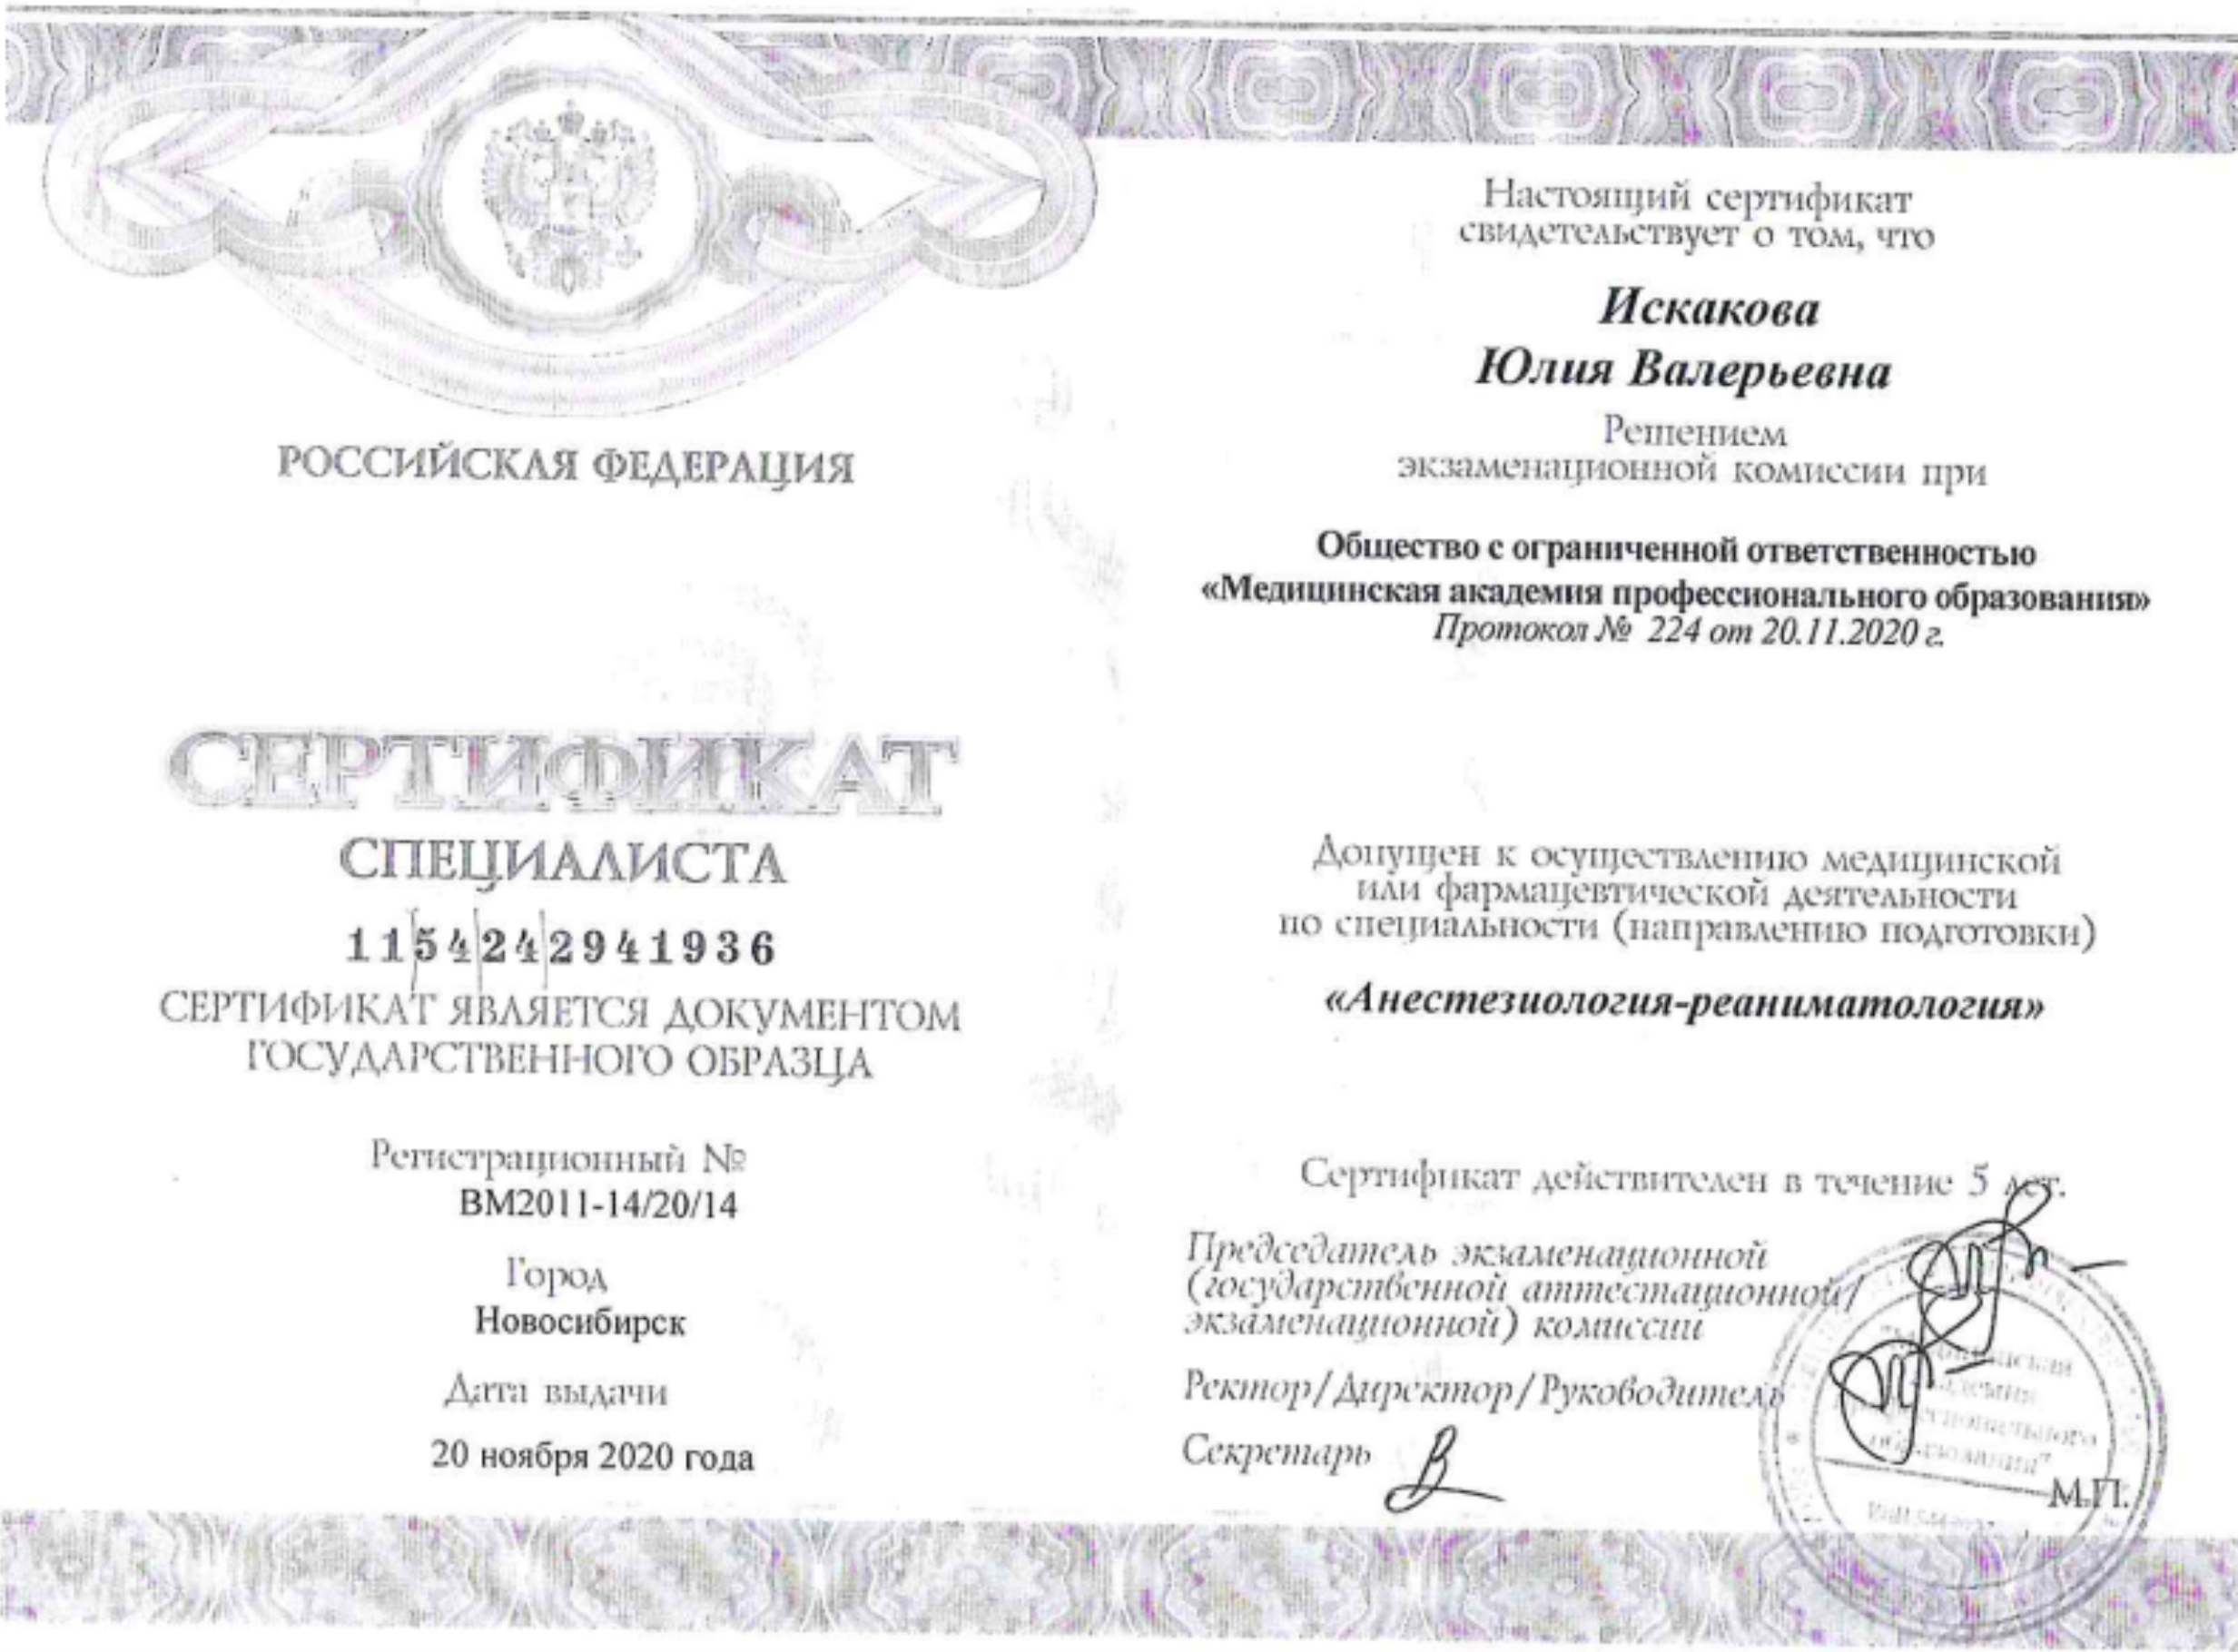 Сертификат анестезиолога-реаниматолога 2020 г.